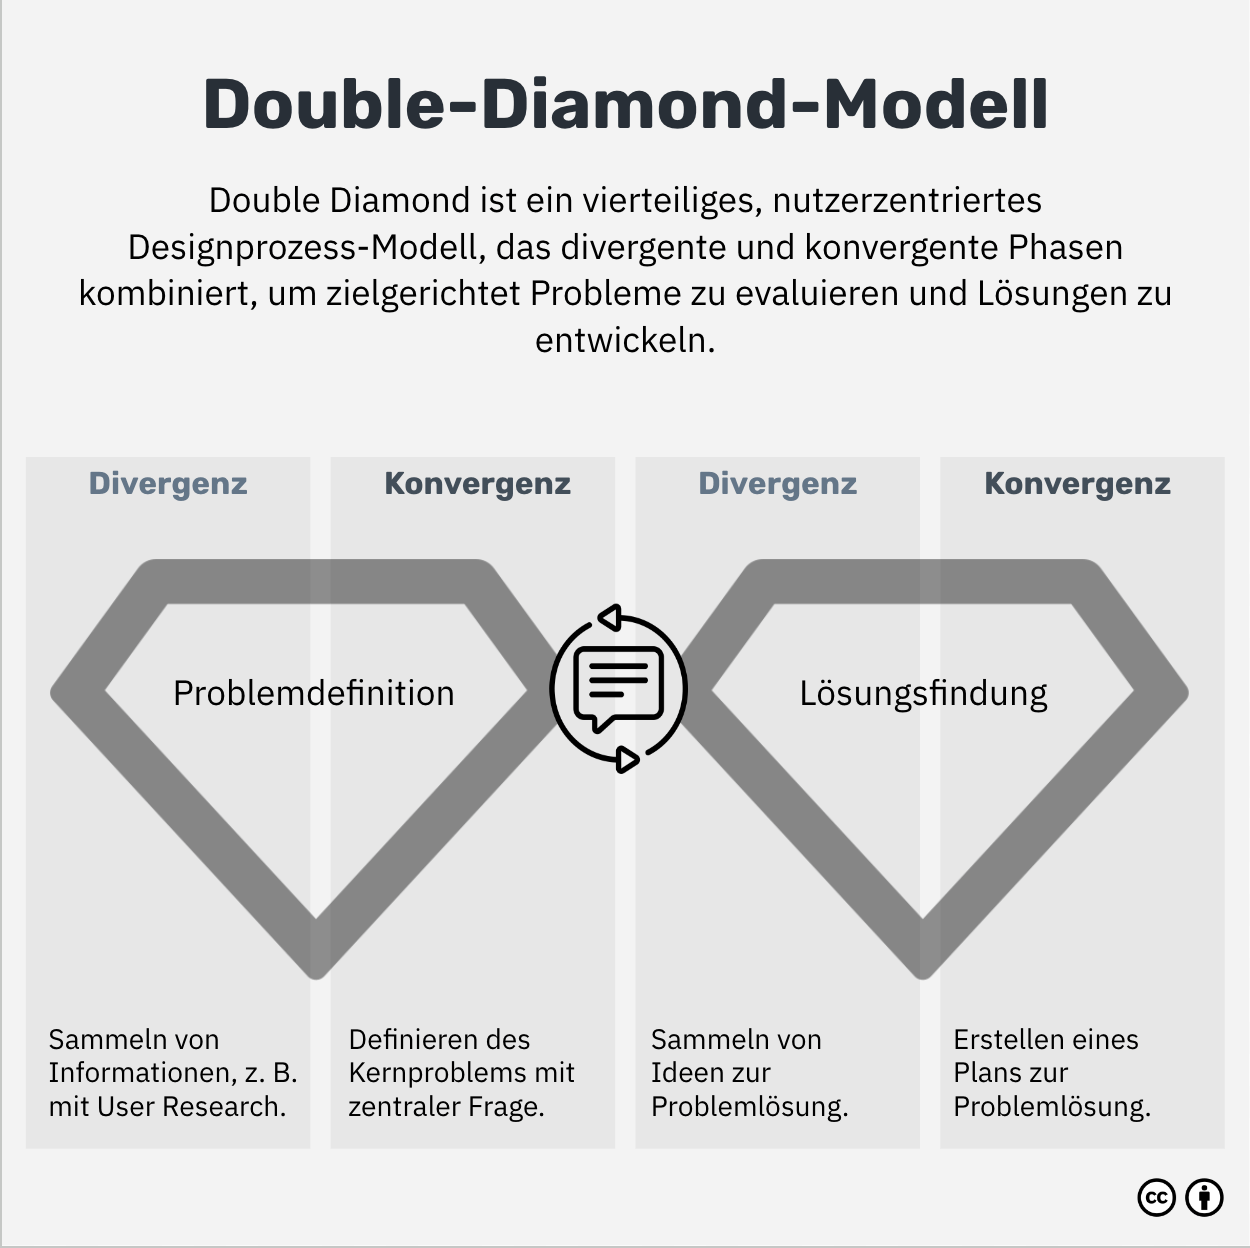 Was ist das Double-Diamond-Modell?